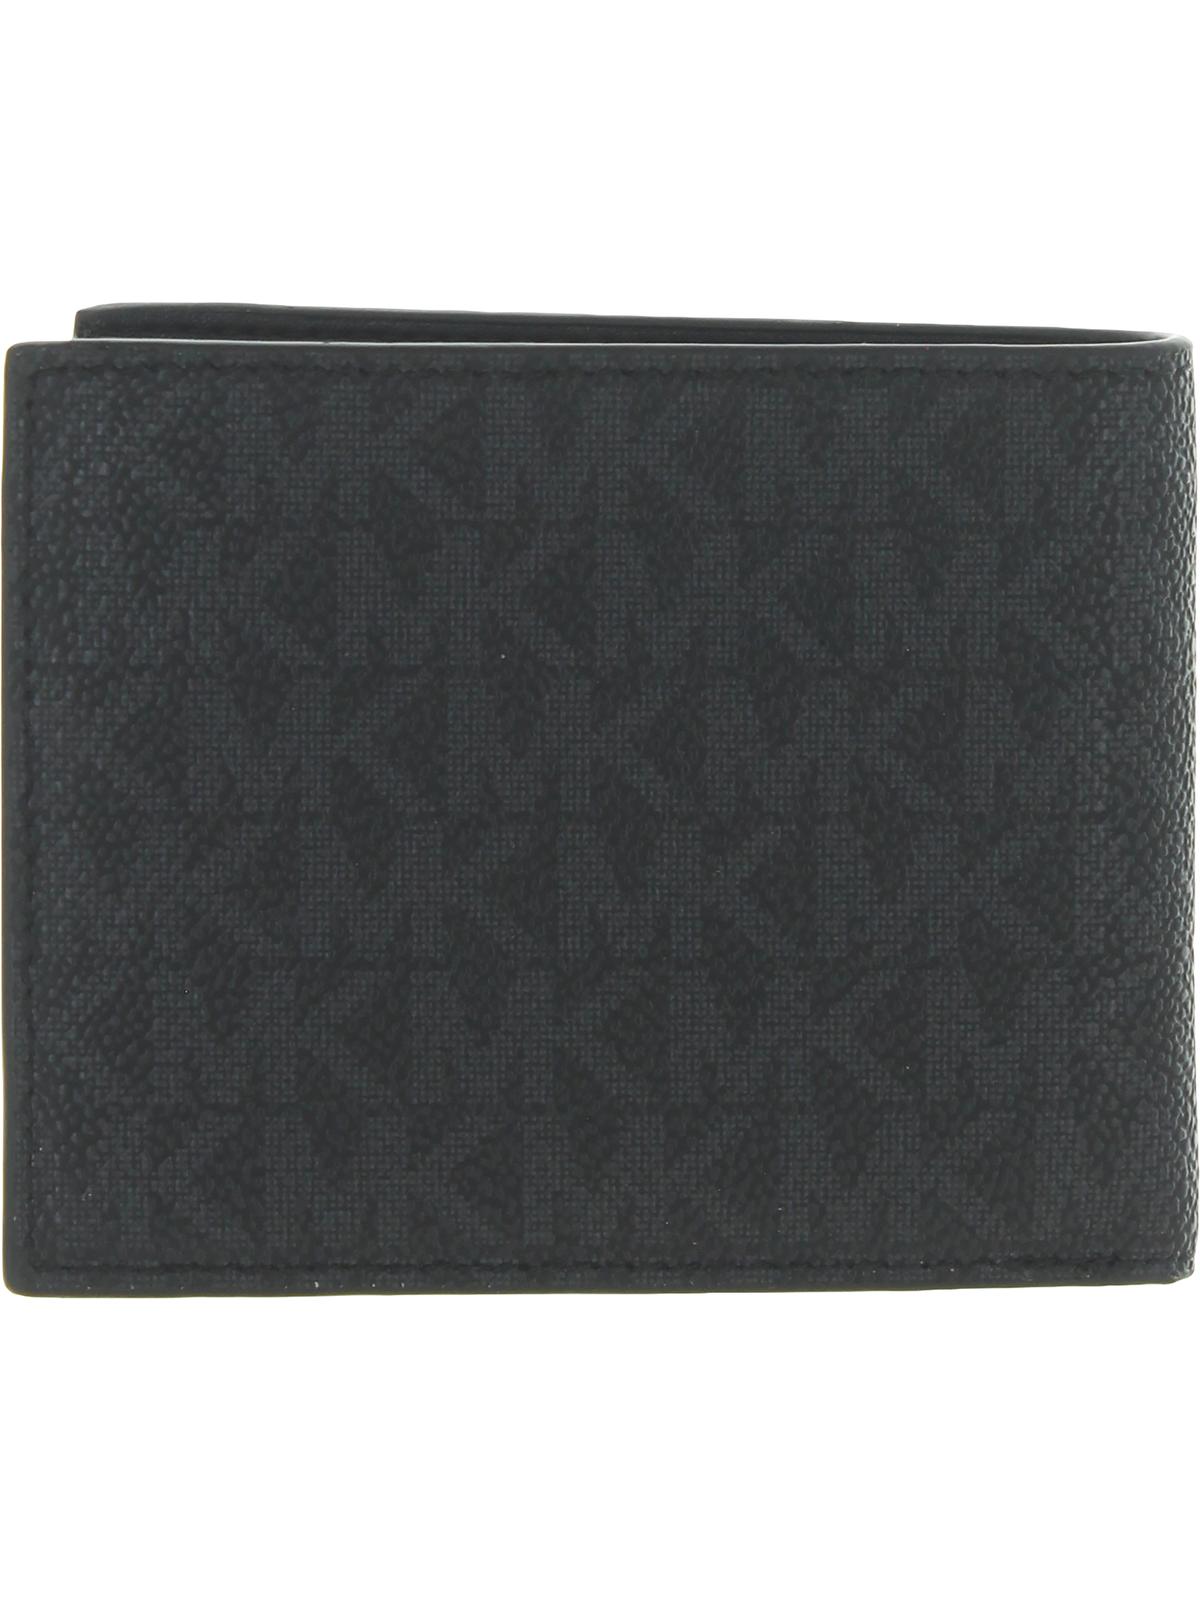 Michael Kors 'Jet Set' Men's Graphic Bi-Fold Wallet 2-Fold (Black) - image 2 of 2